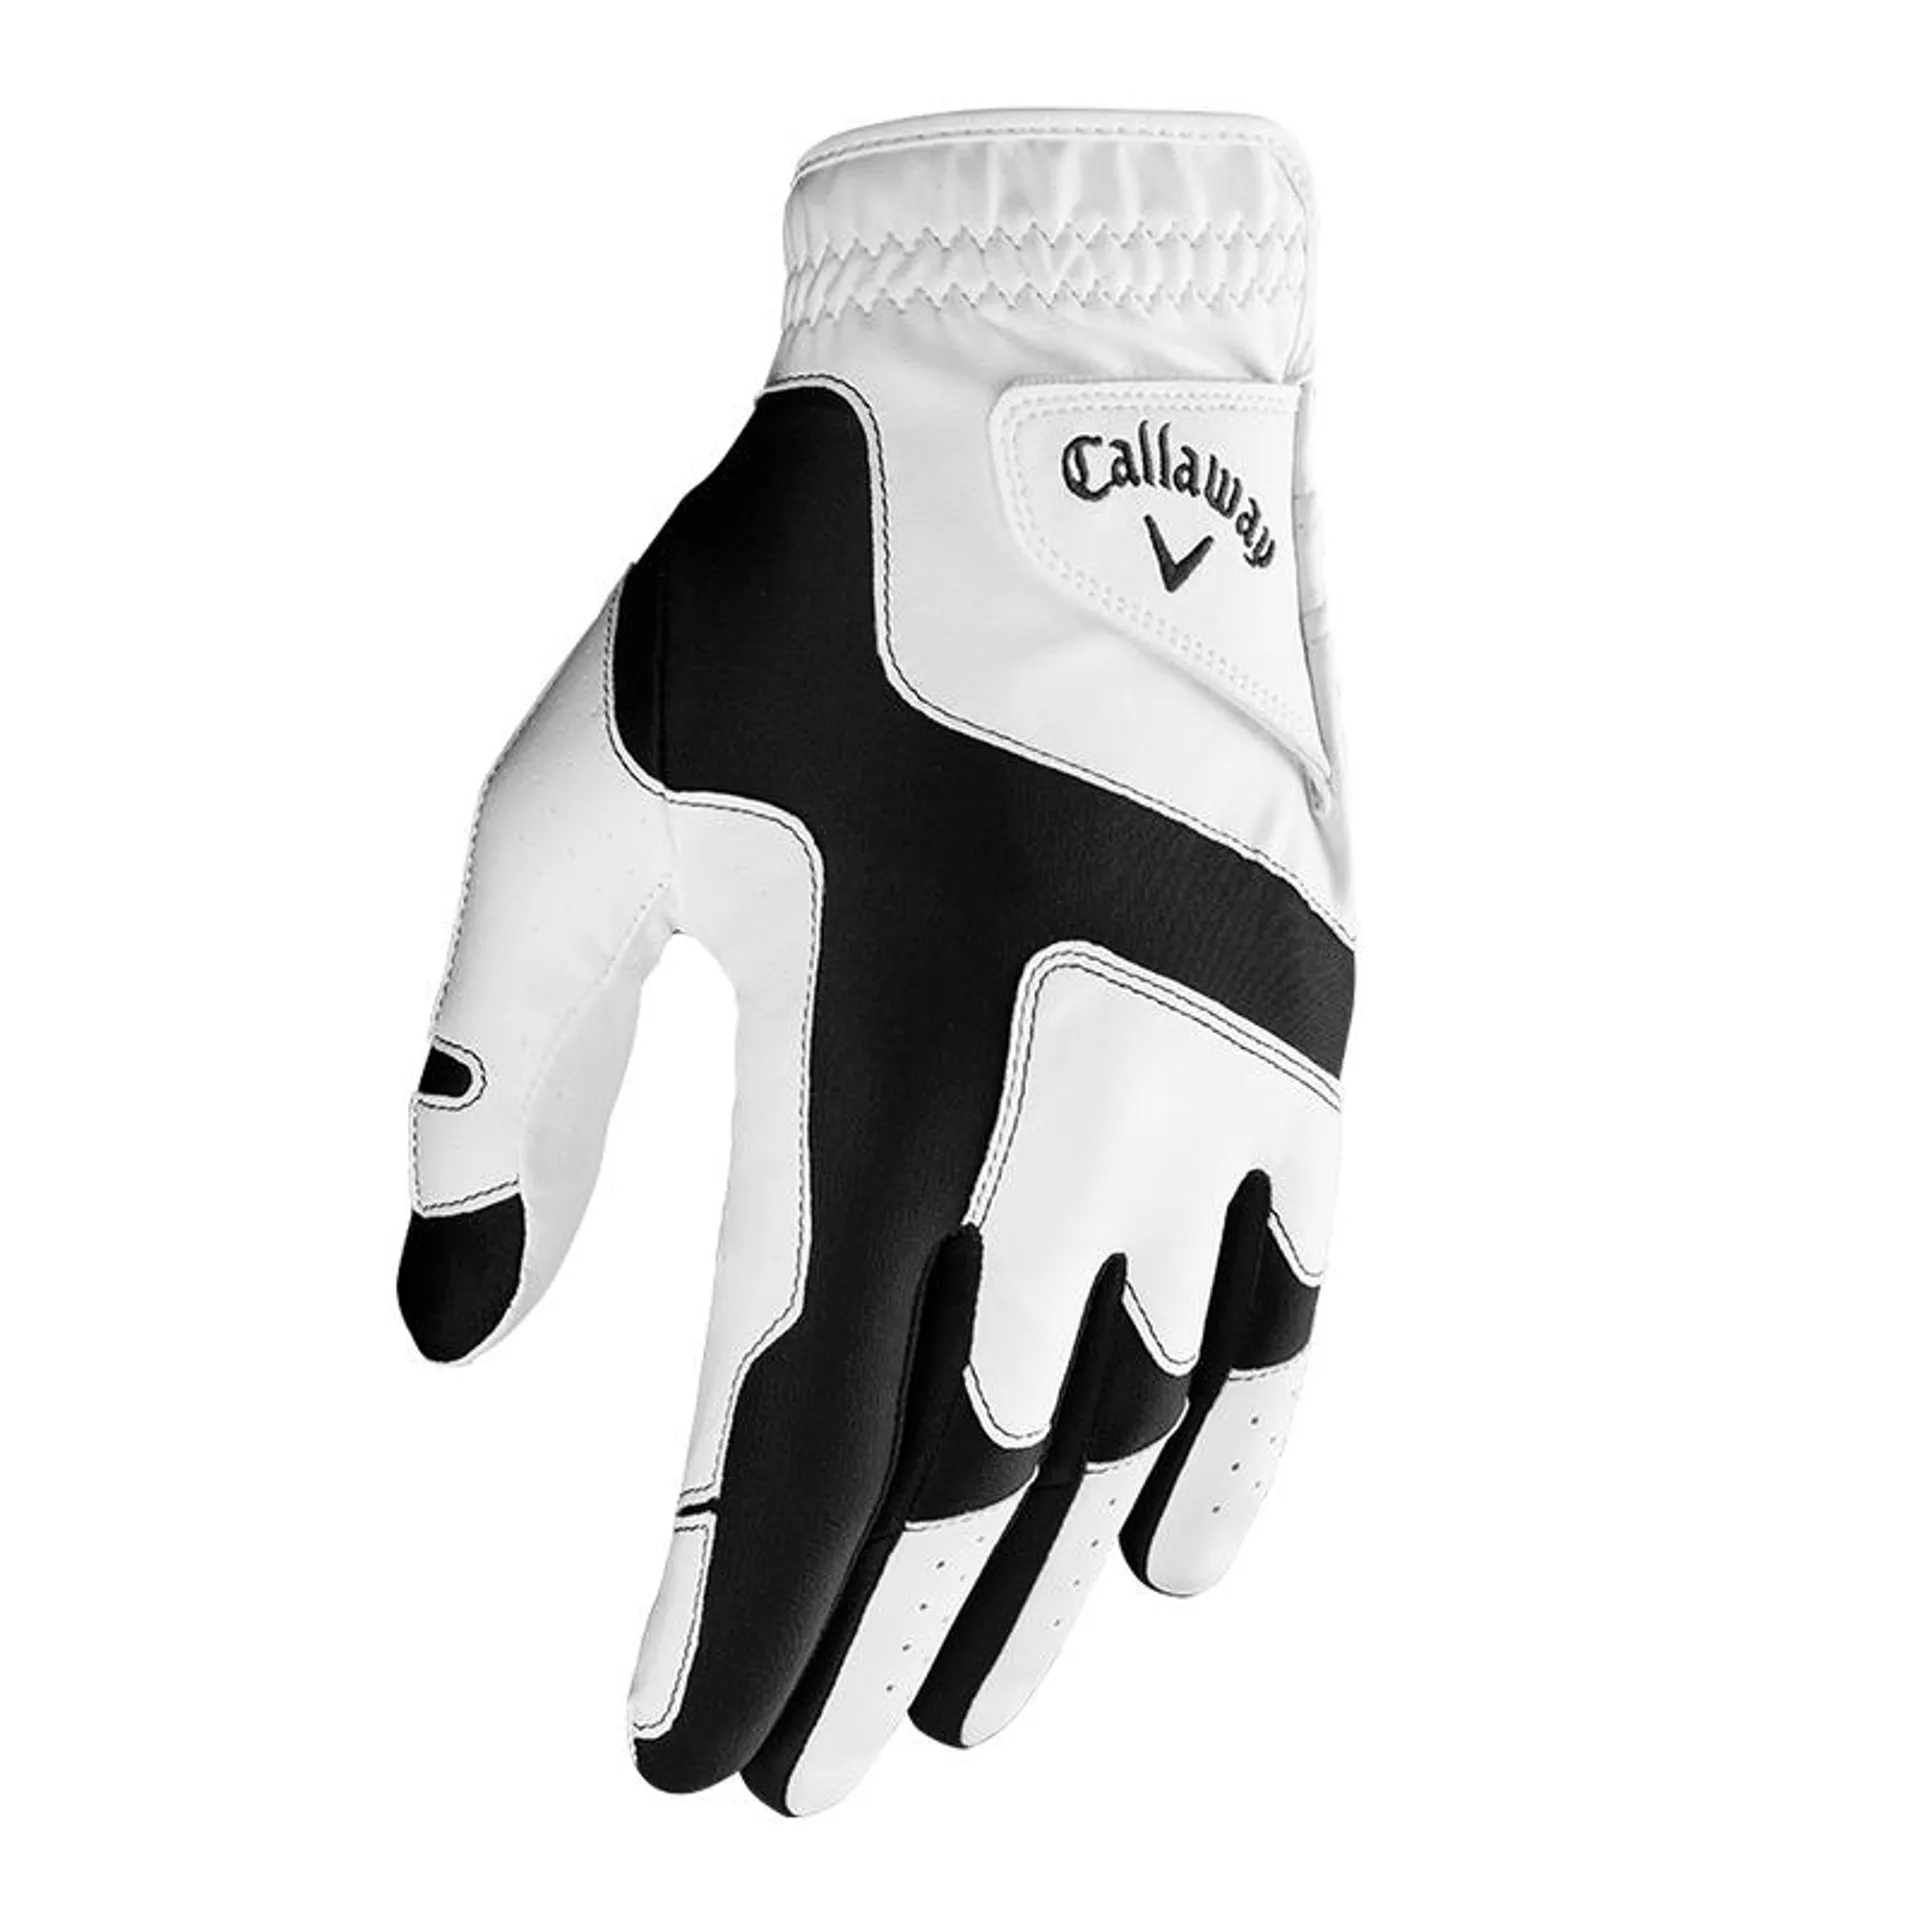 OPTI FIT Golf Gloves